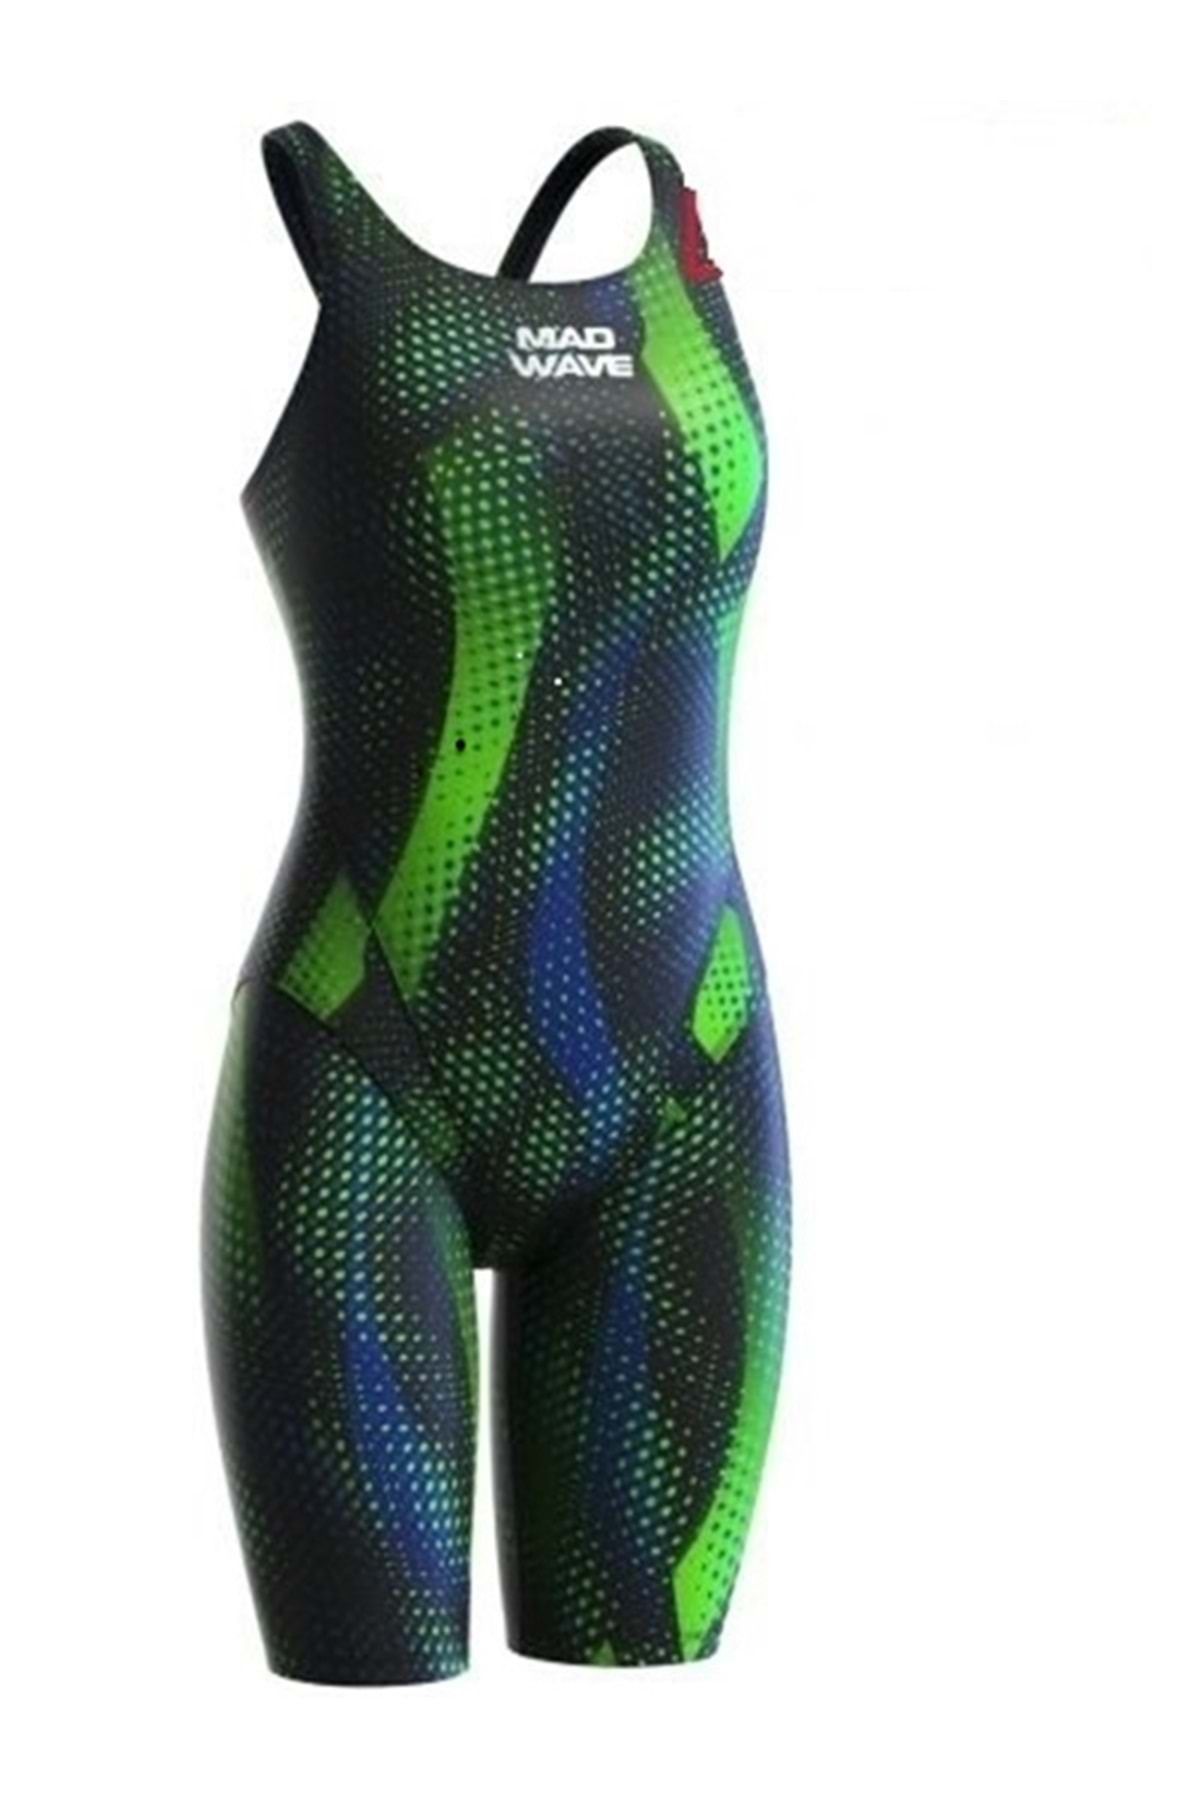 Mad Wave Kadın Yarış Mayosu Open Back Swimsuit Bod - Yeşil - Xxxs